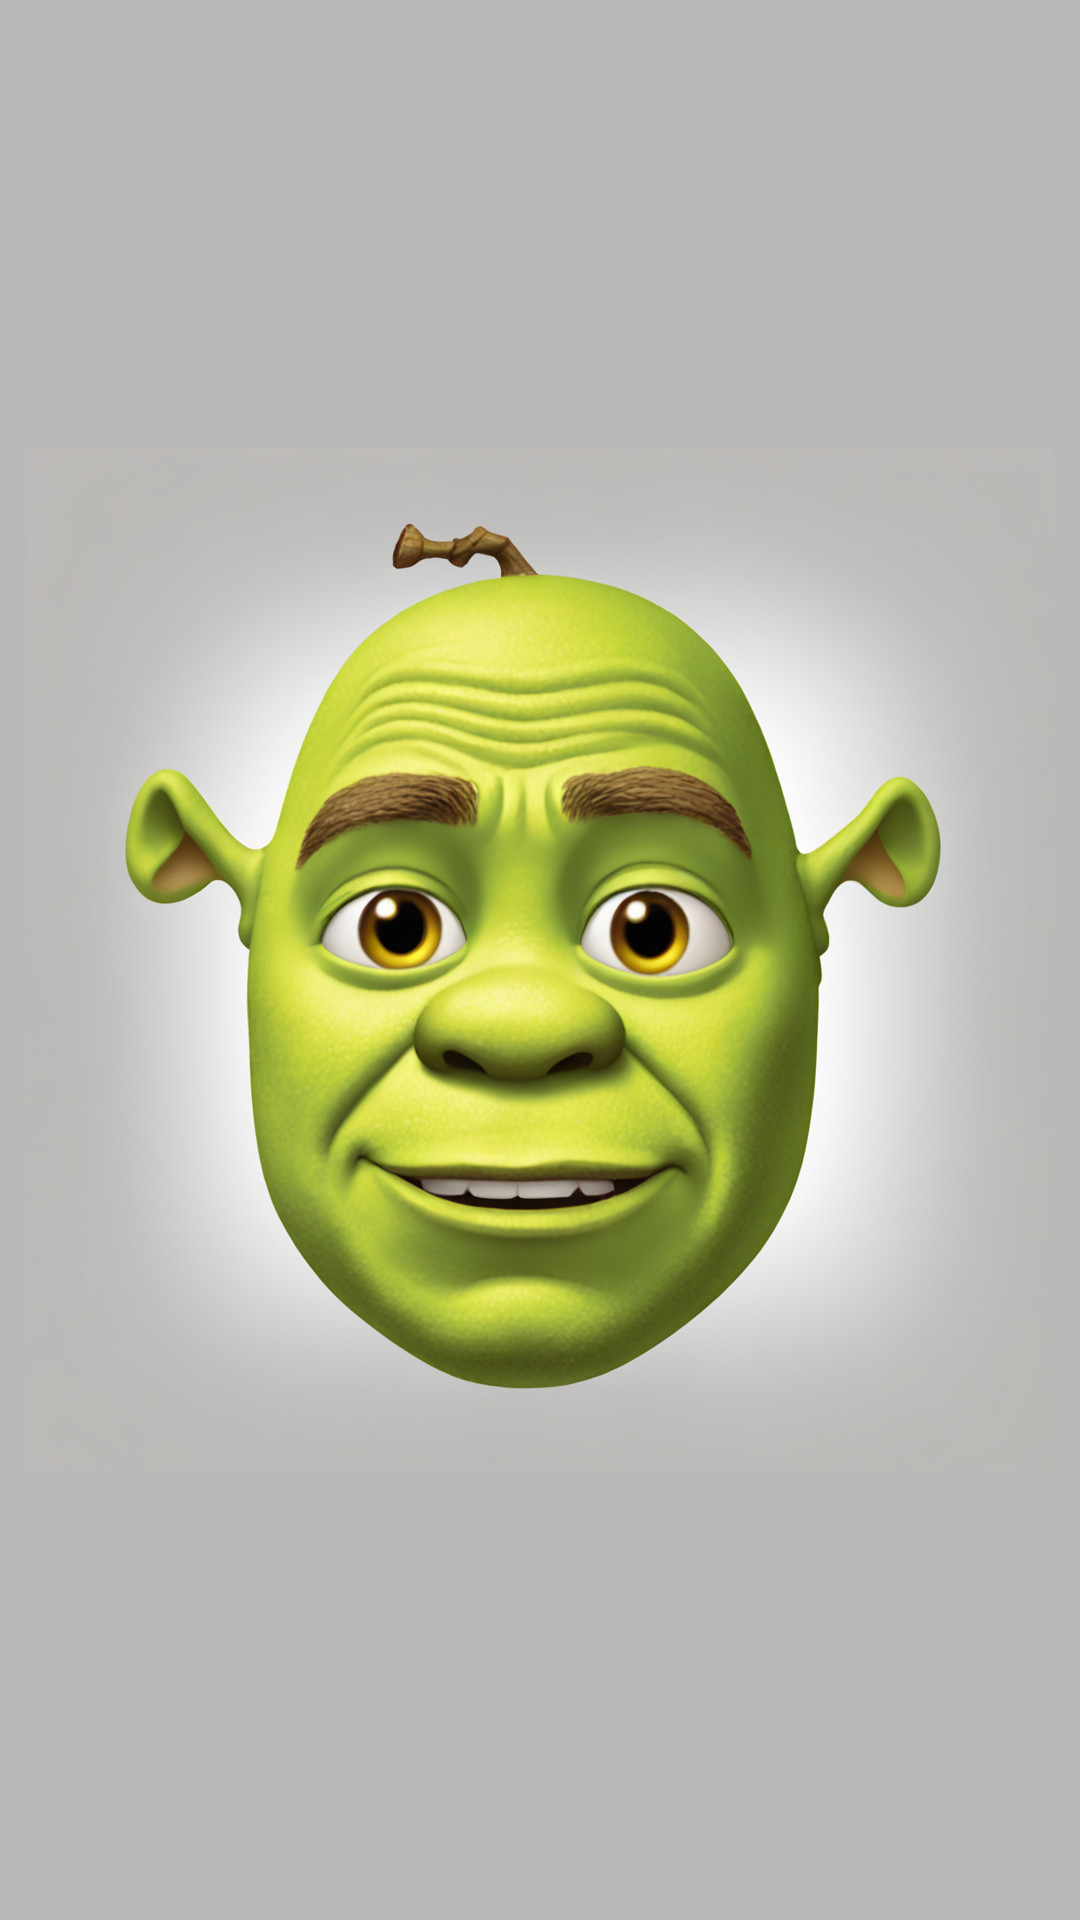 Shrek DVD, featuring Shrek